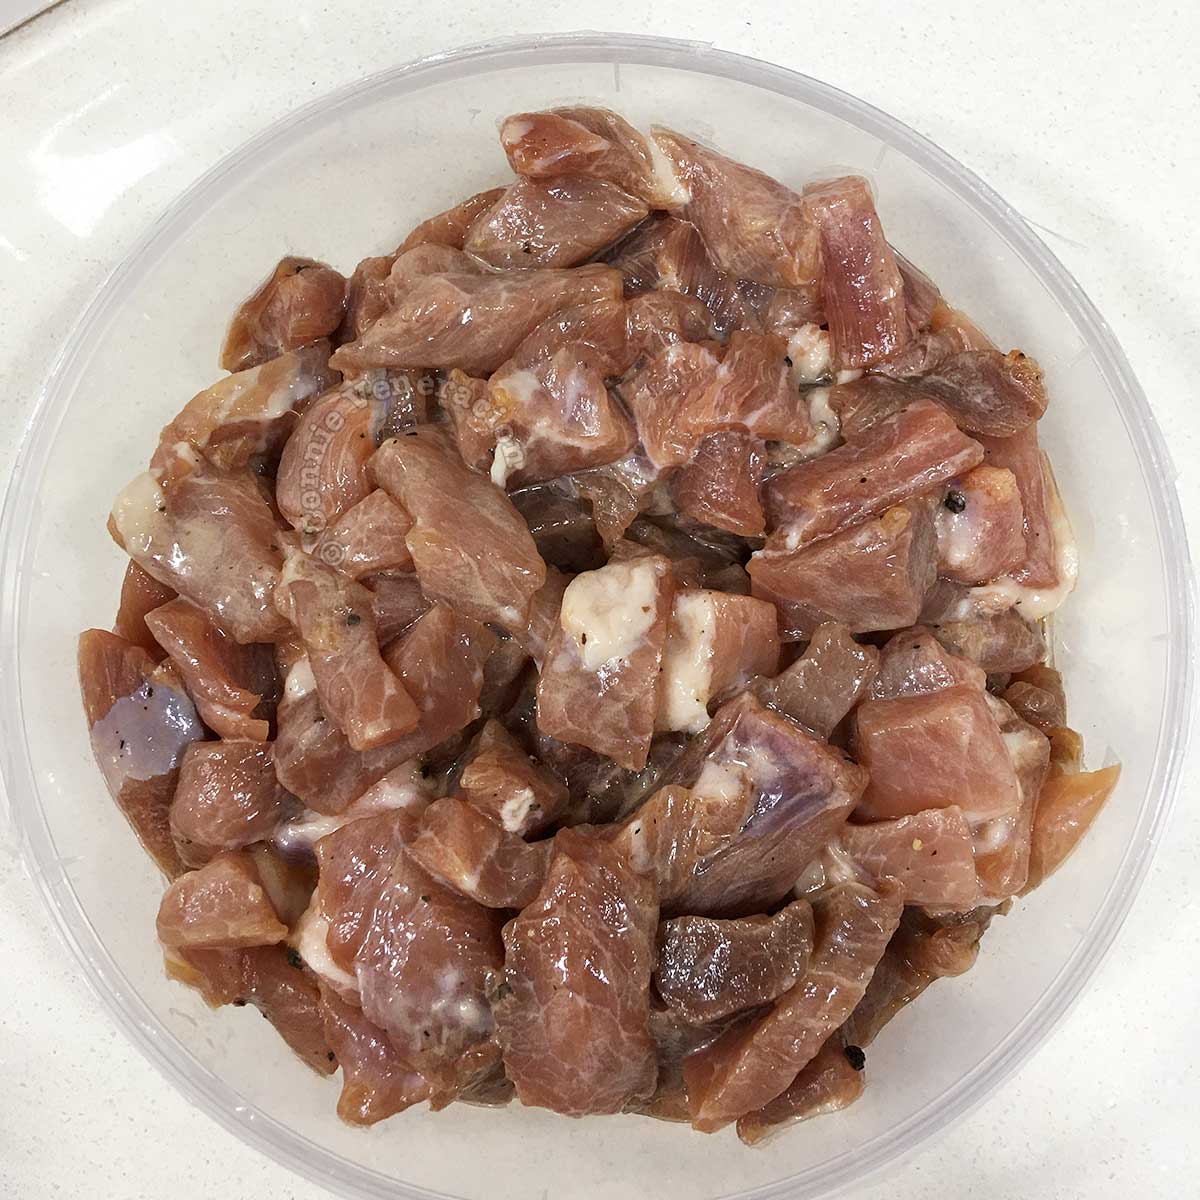 Marinating cubed pork chops